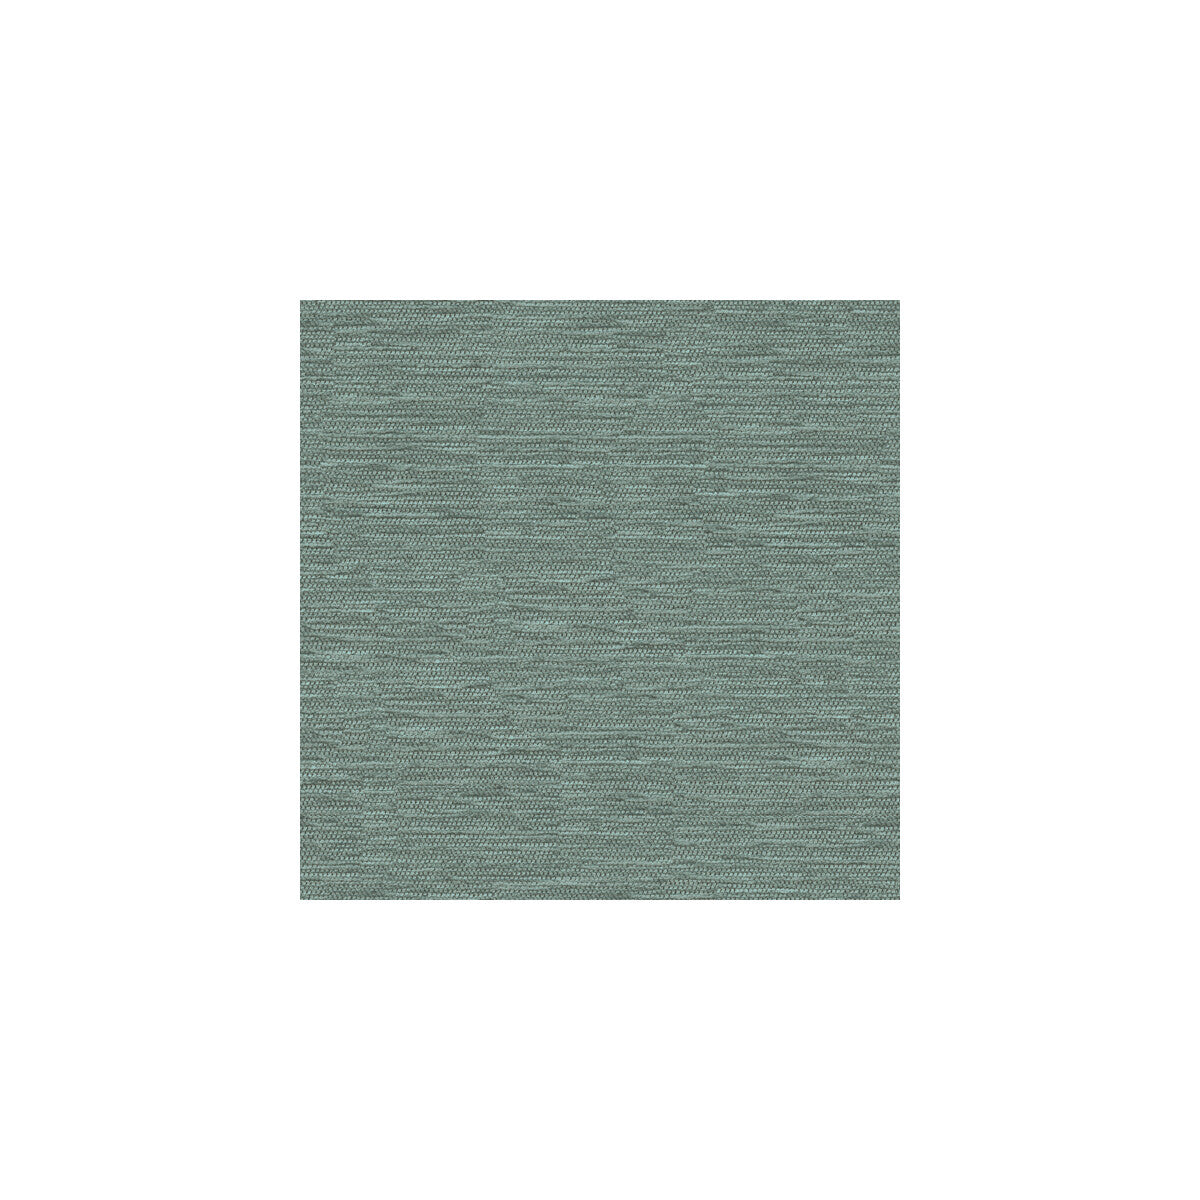 Kravet Smart fabric in 33001-15 color - pattern 33001.15.0 - by Kravet Smart